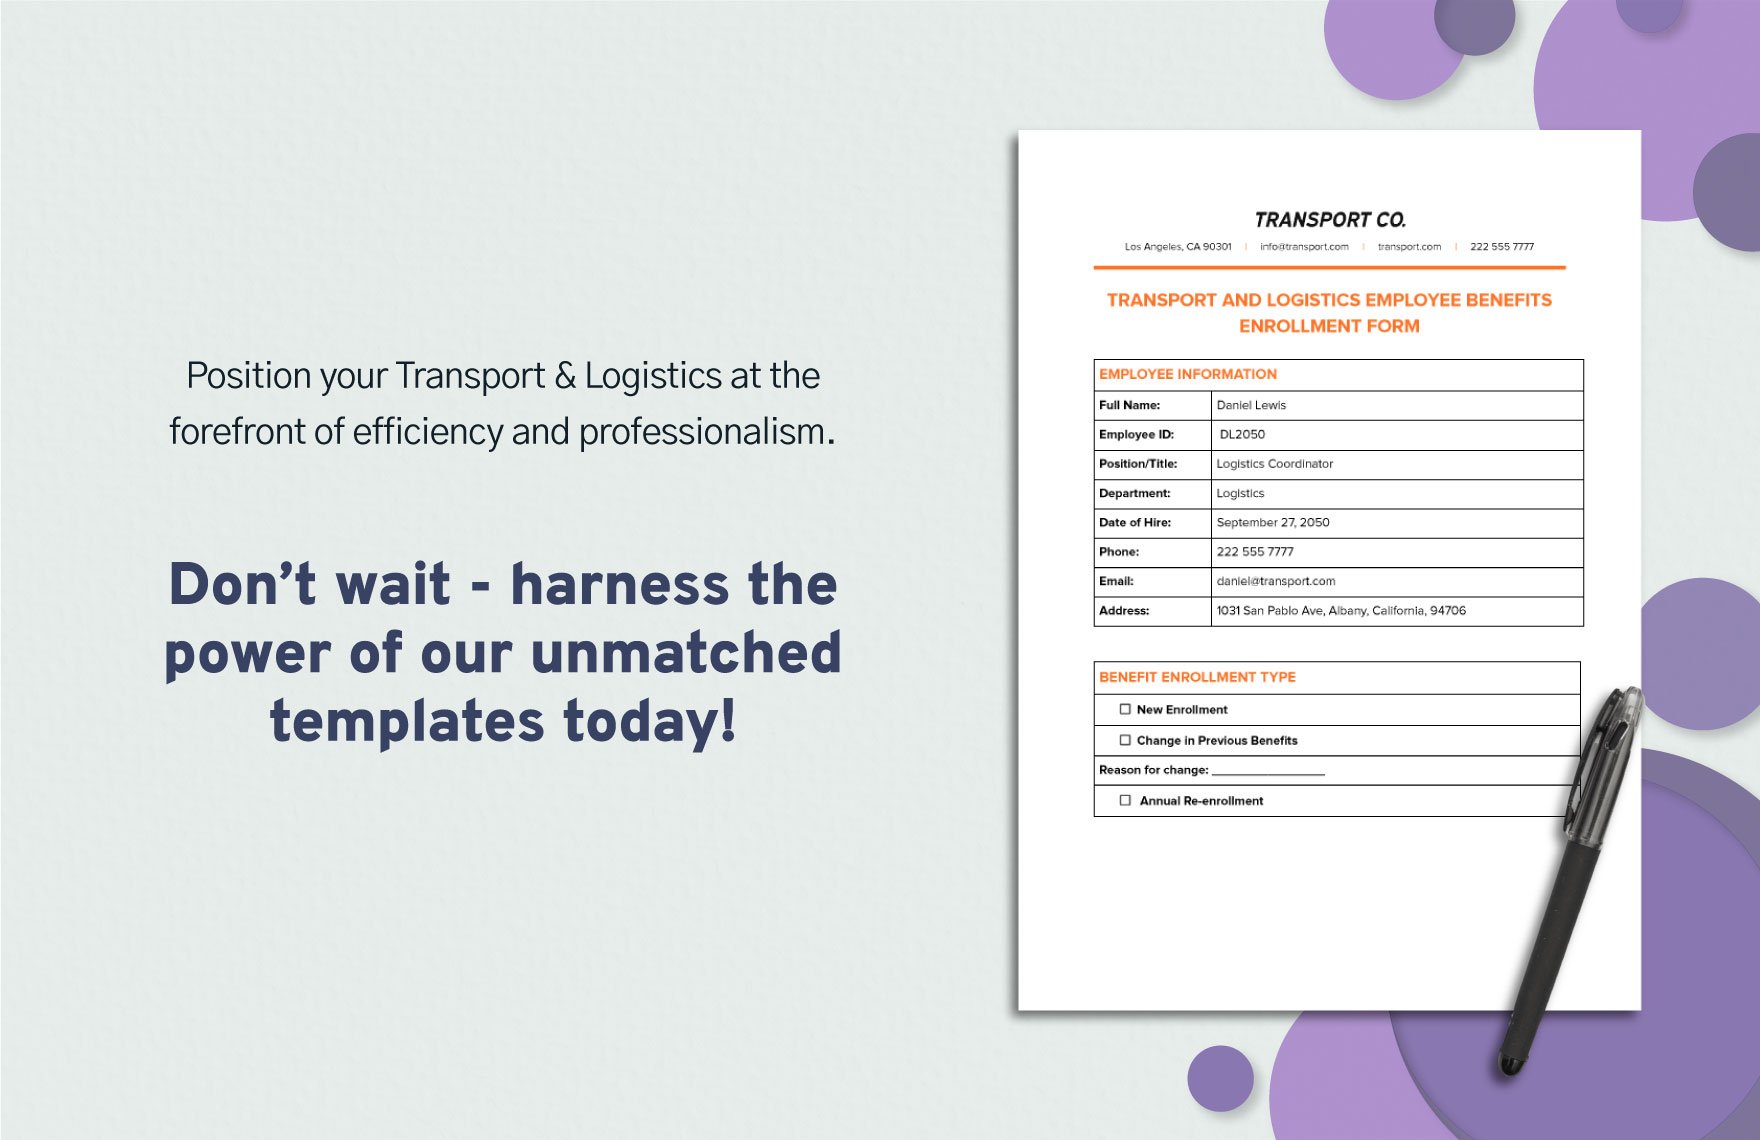 Transport and Logistics Employee Benefits Enrollment Form Template